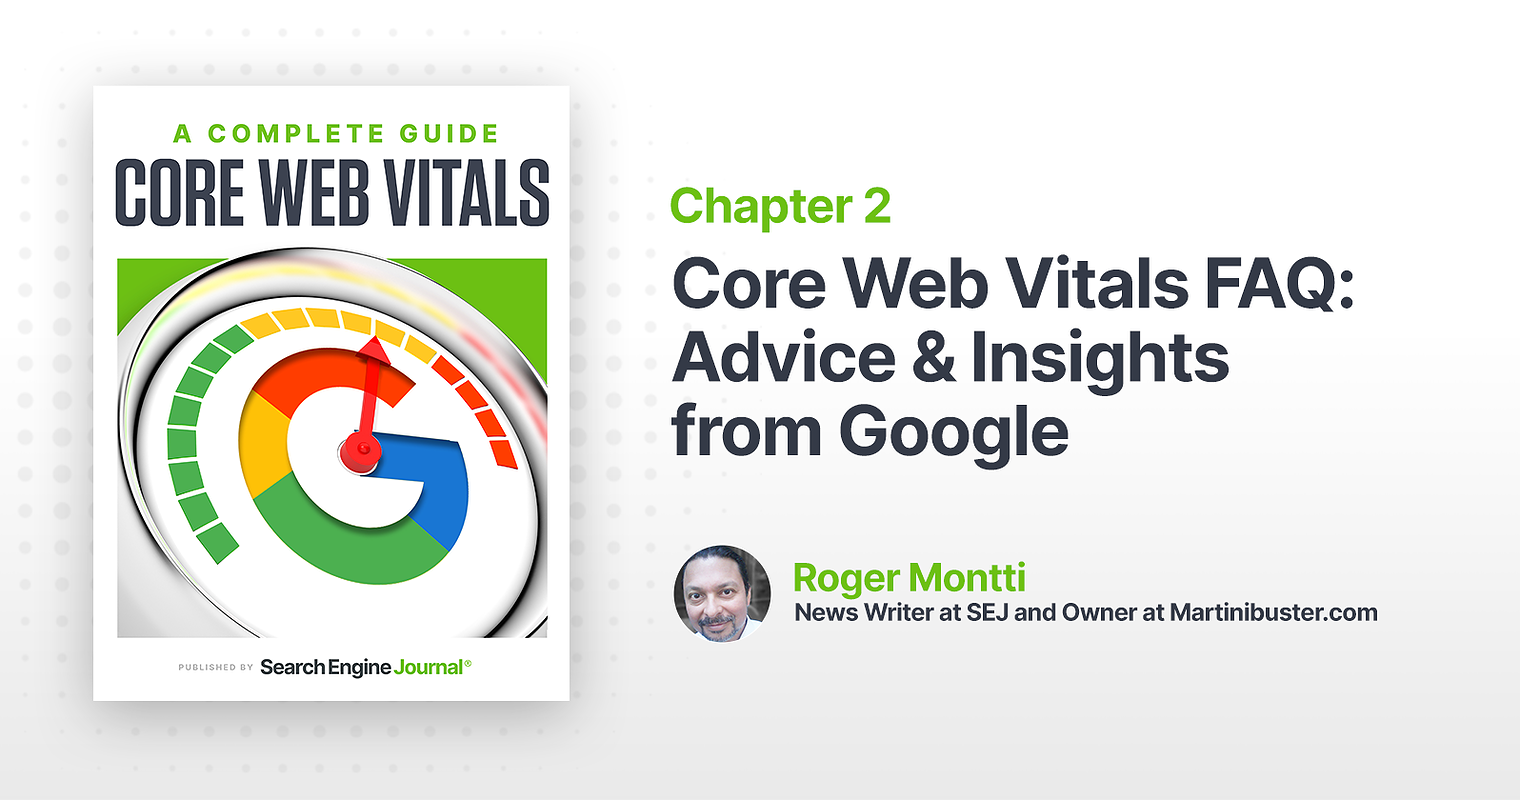 Google FAQ Provides Core Web Vitals Insights